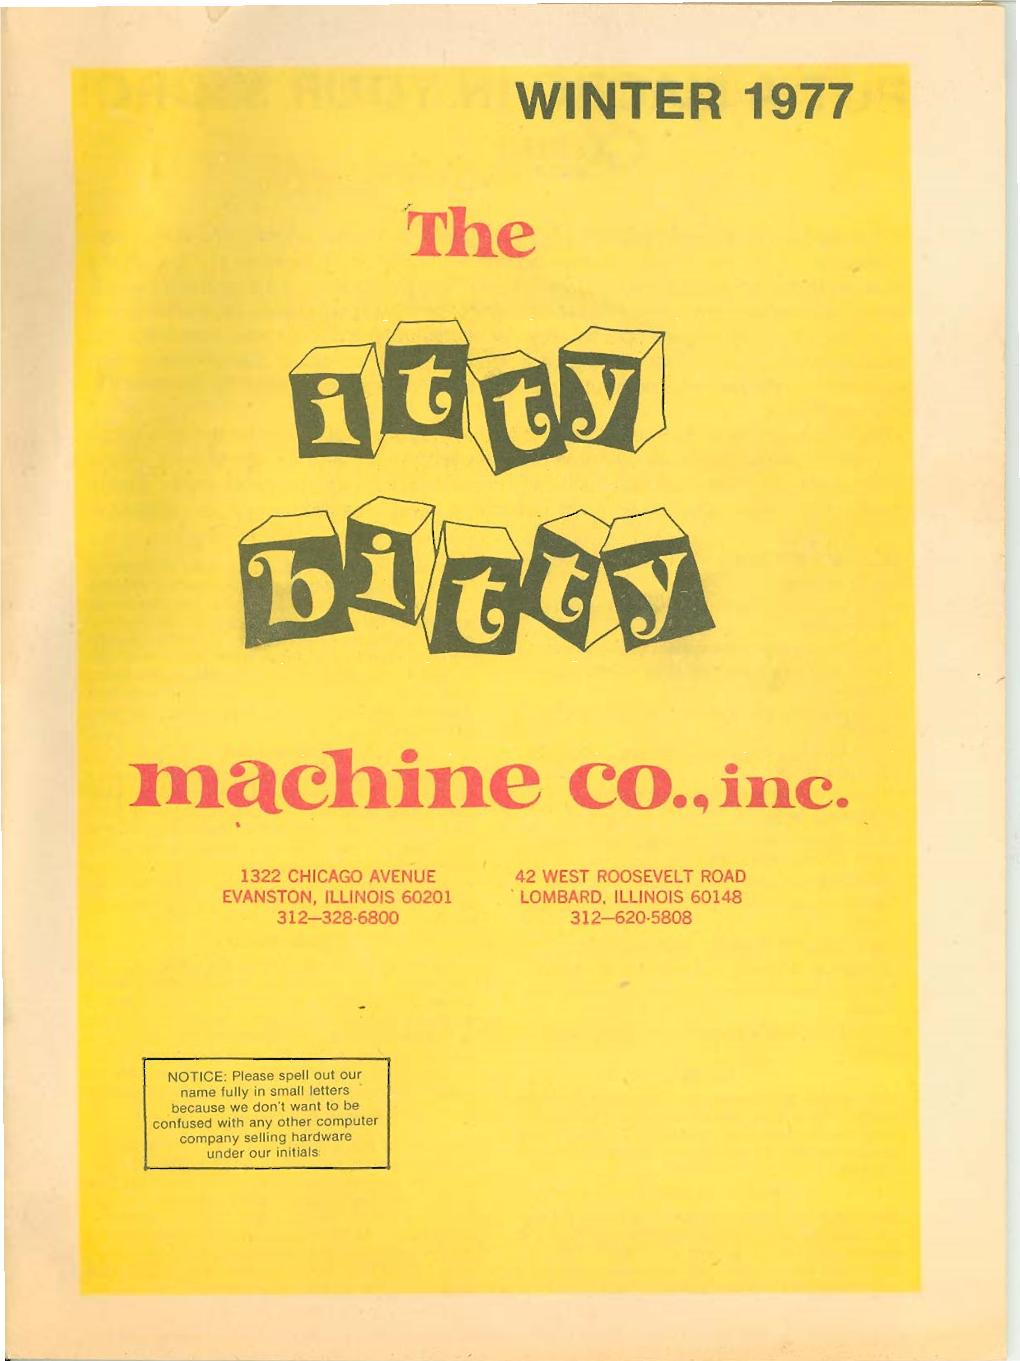 The Itty Bitty Machine Co., Inc Winter 1977 Catalog